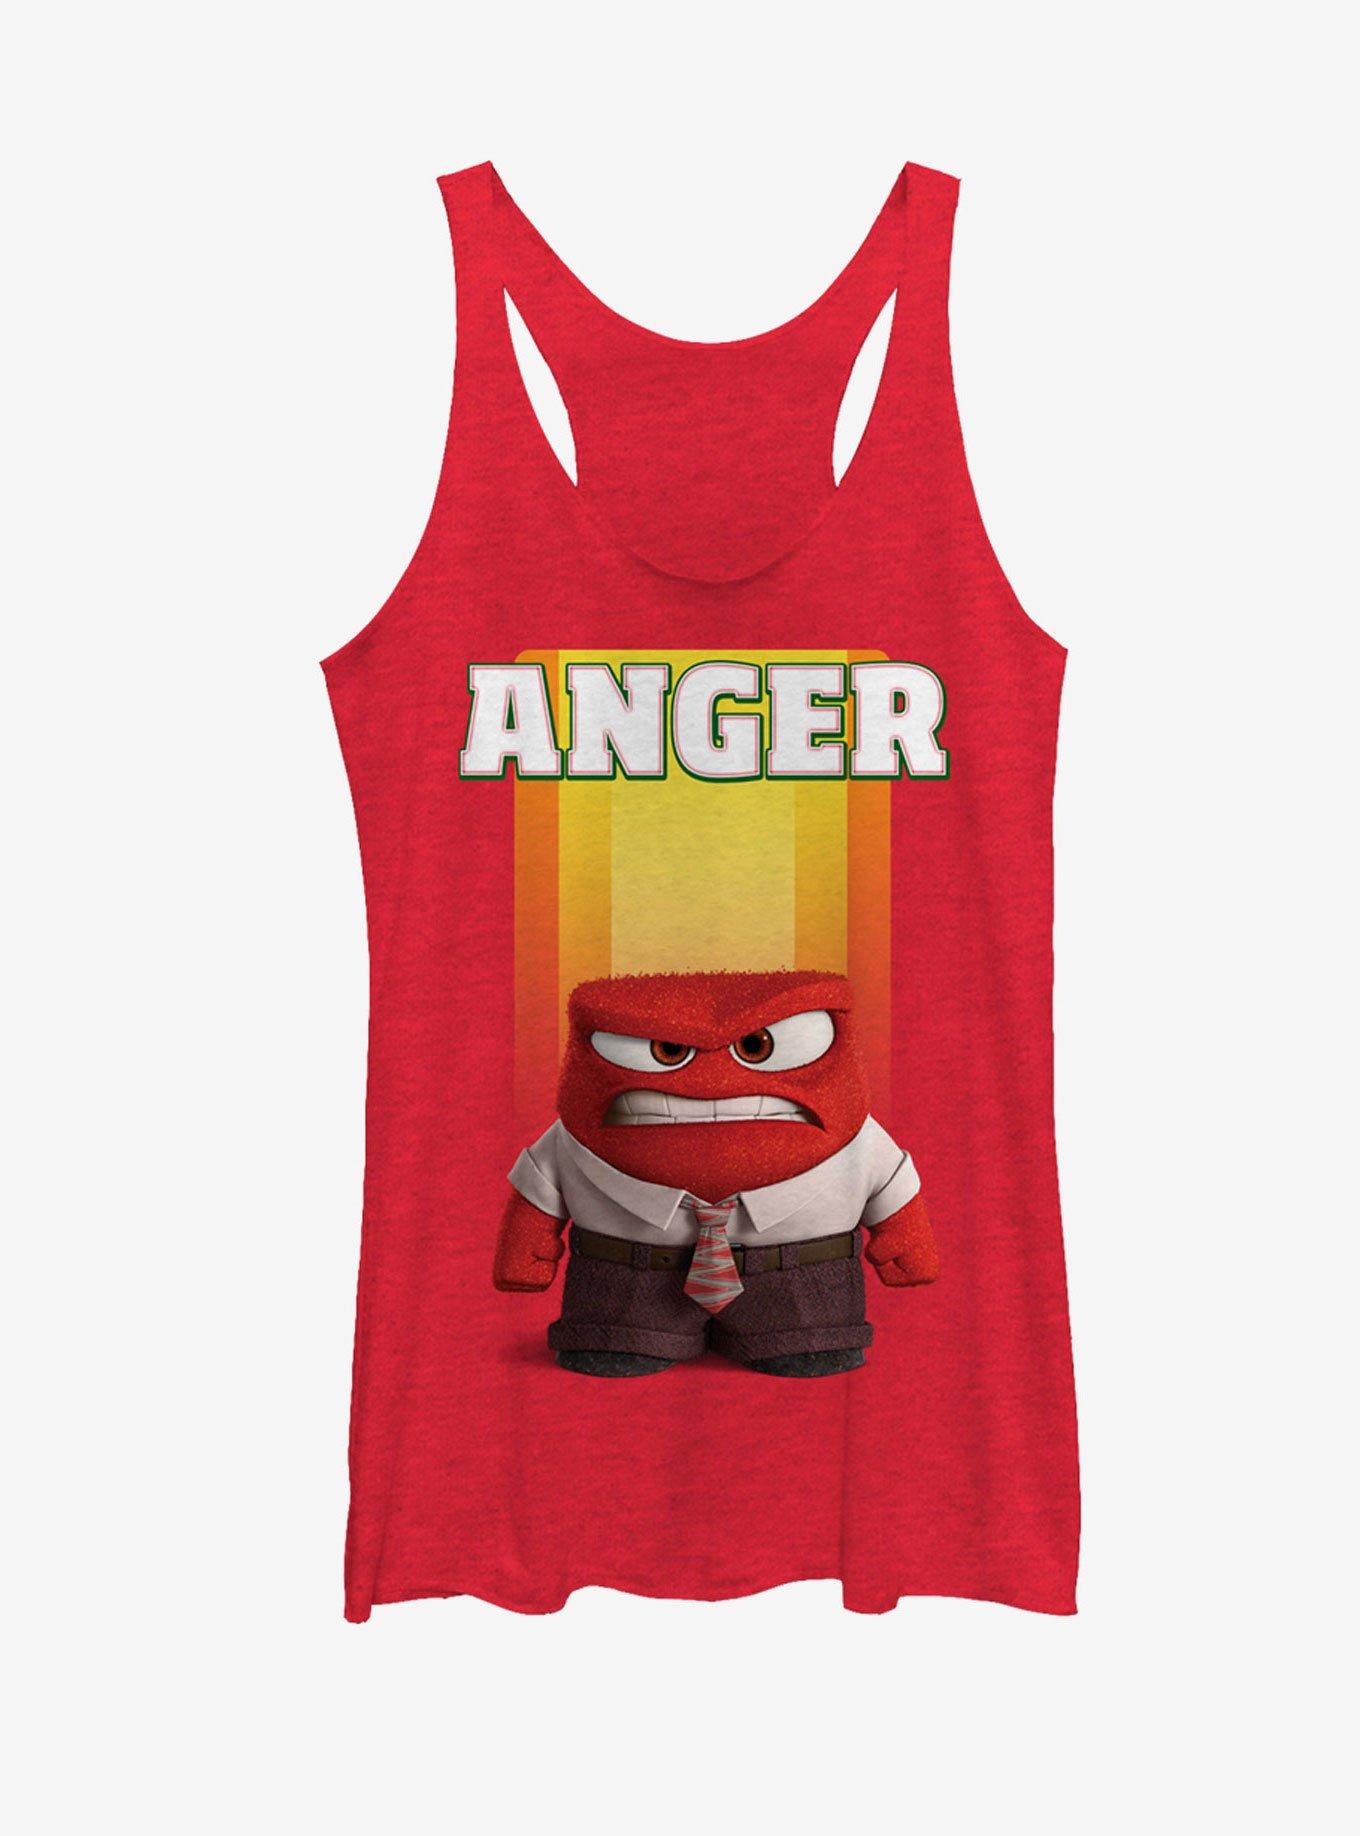 Anger (Inside Out) - Anger - T-Shirt